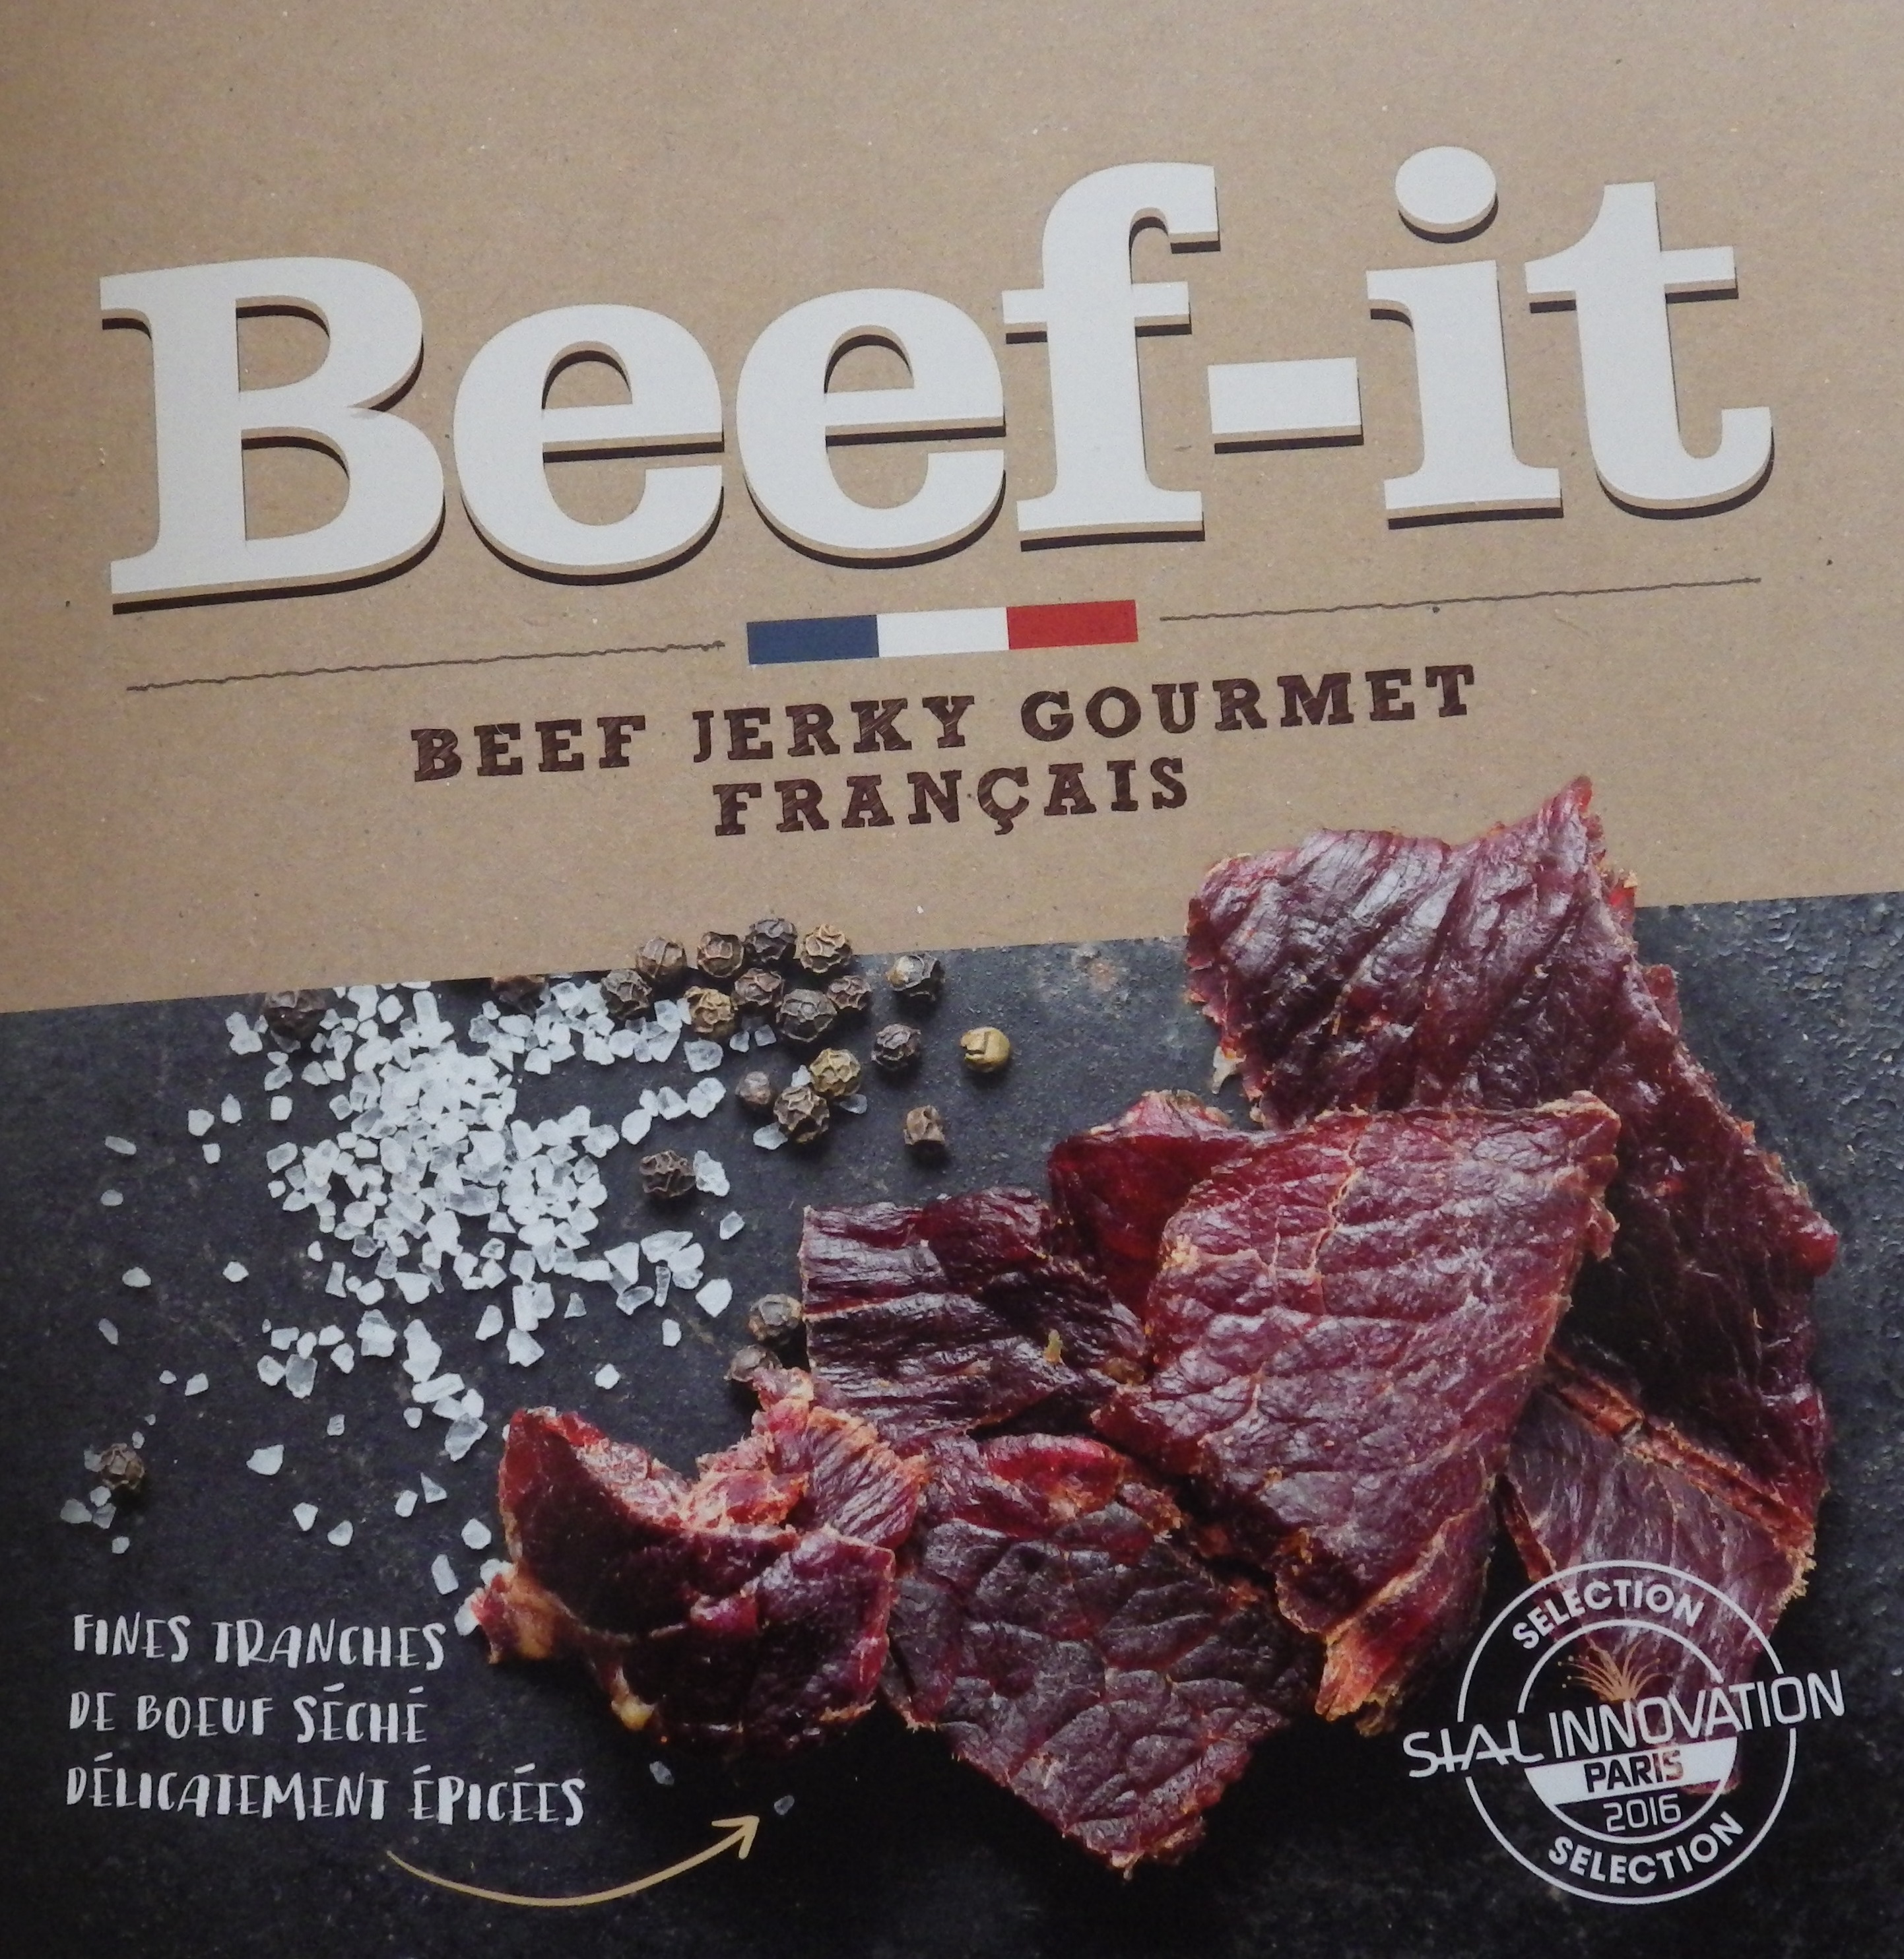 Produit beef-it - viandes séchées type jerky